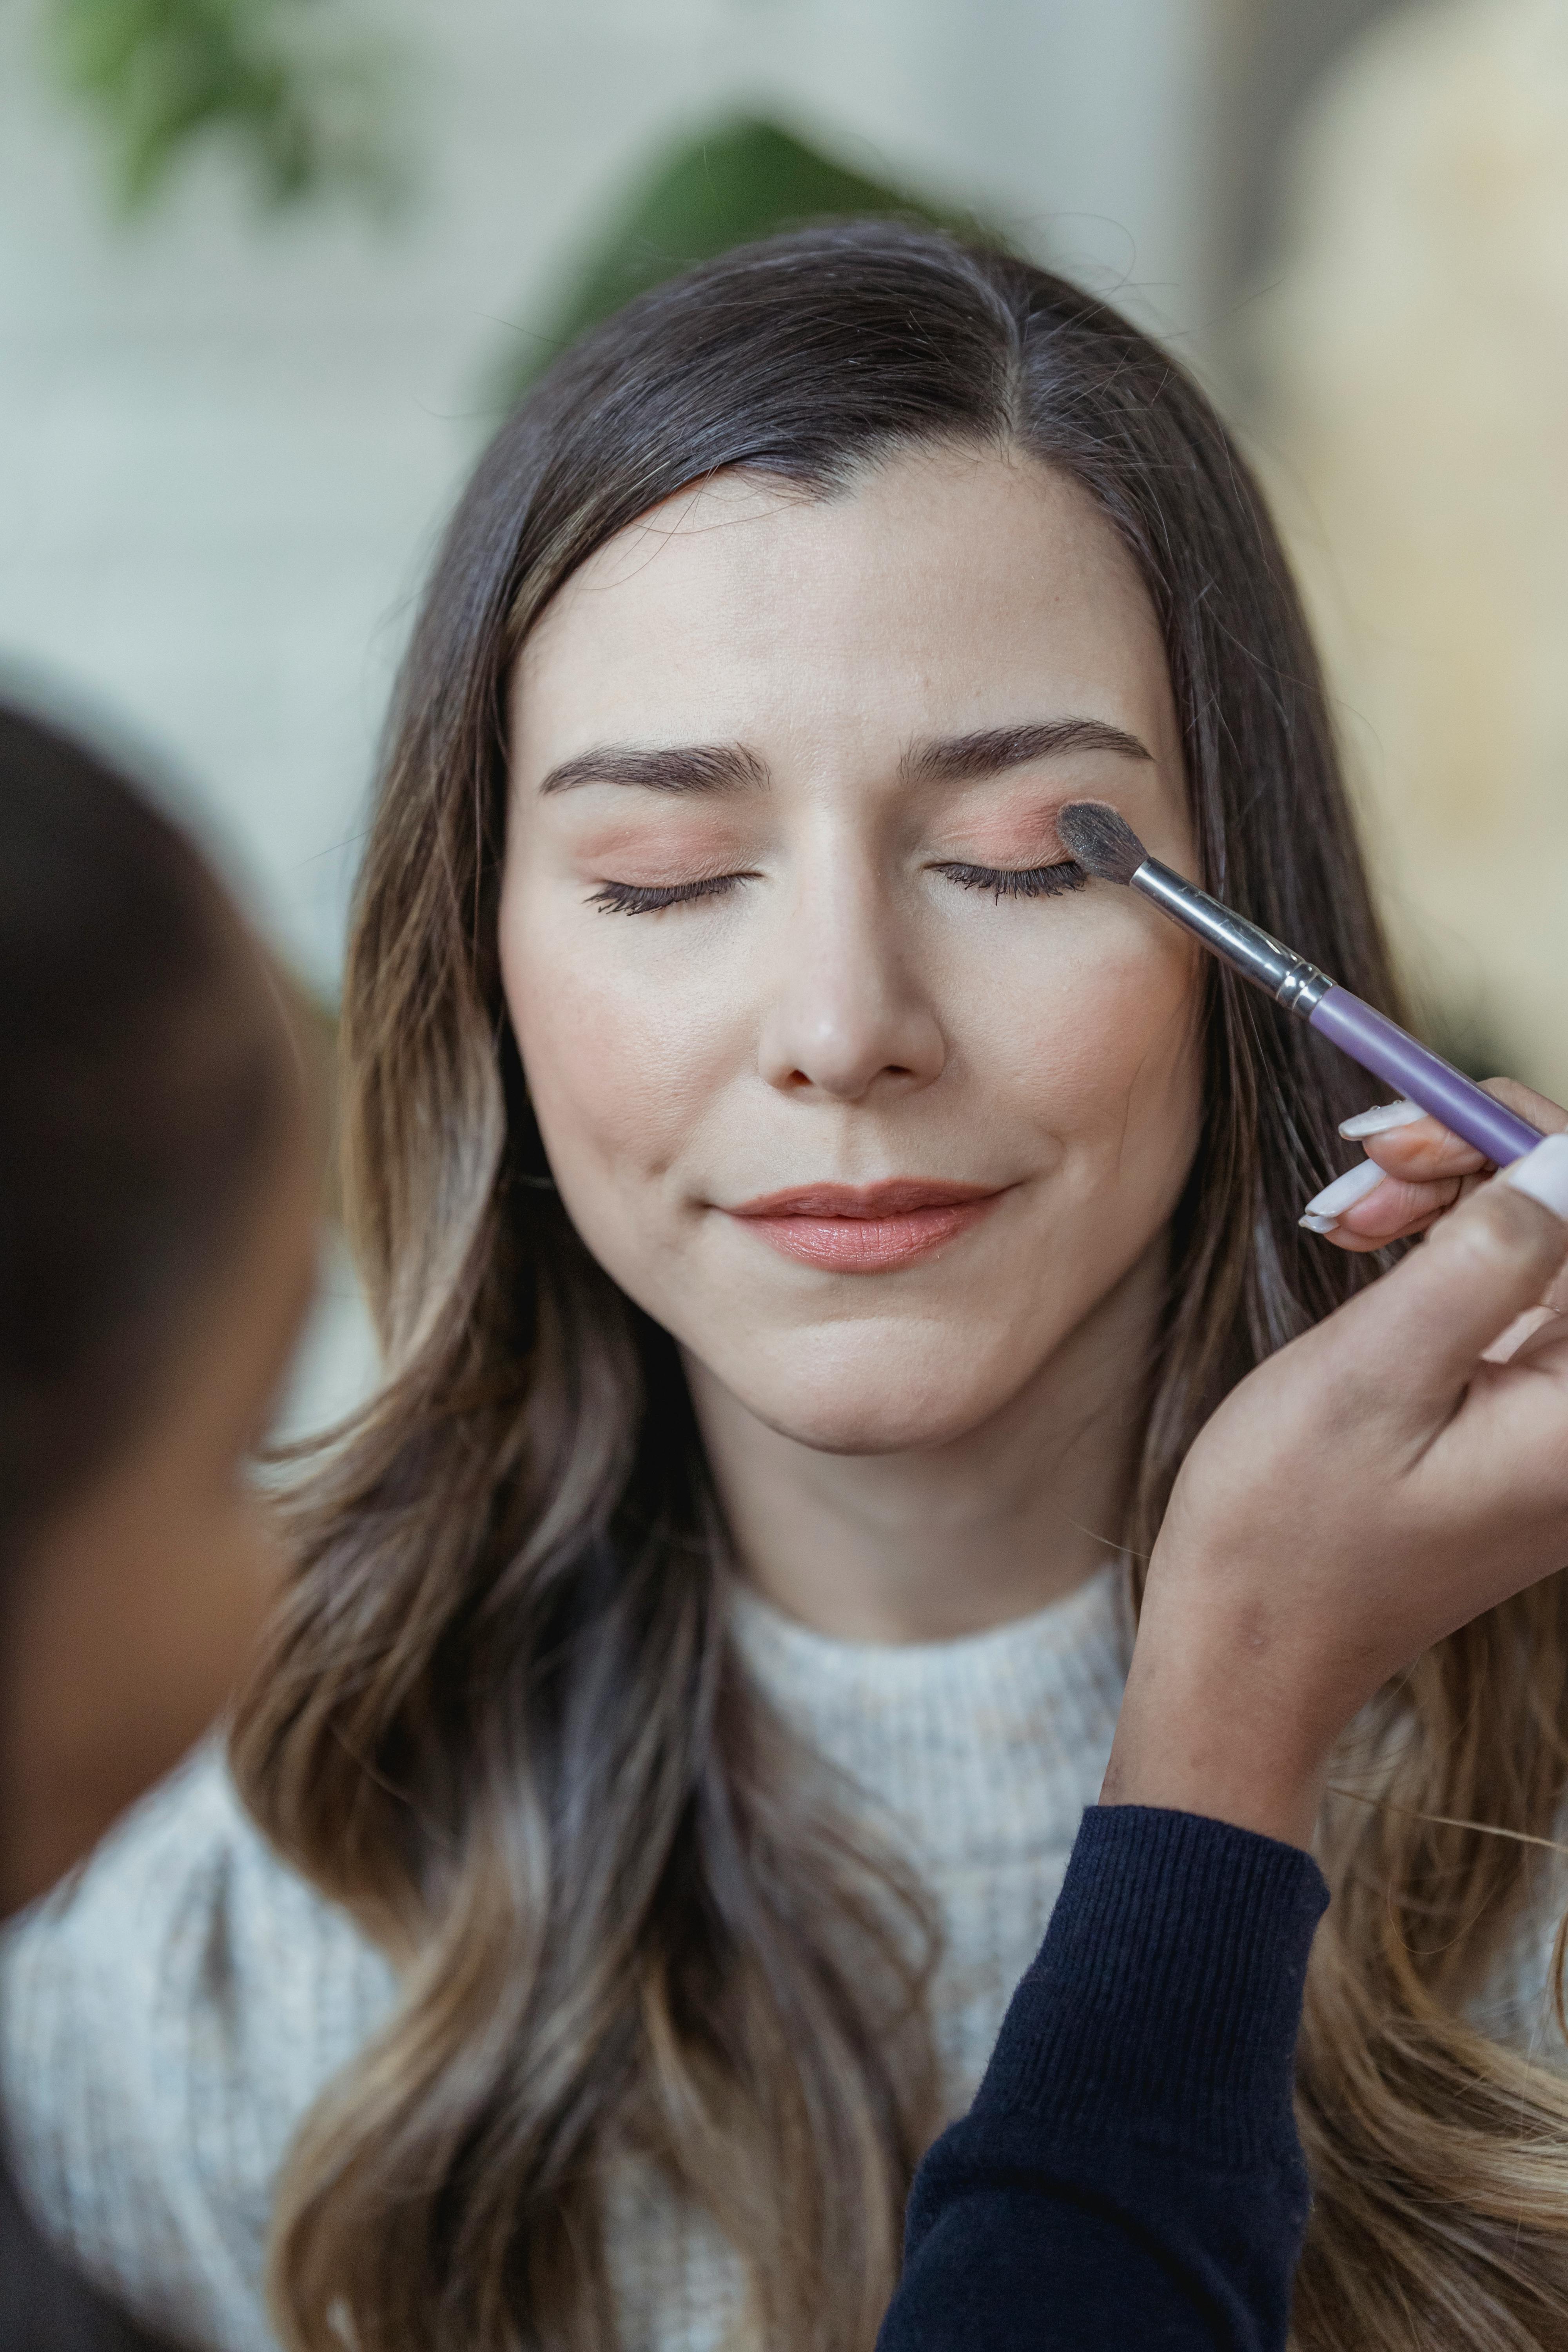 visagiste applying eye makeup on content clients face